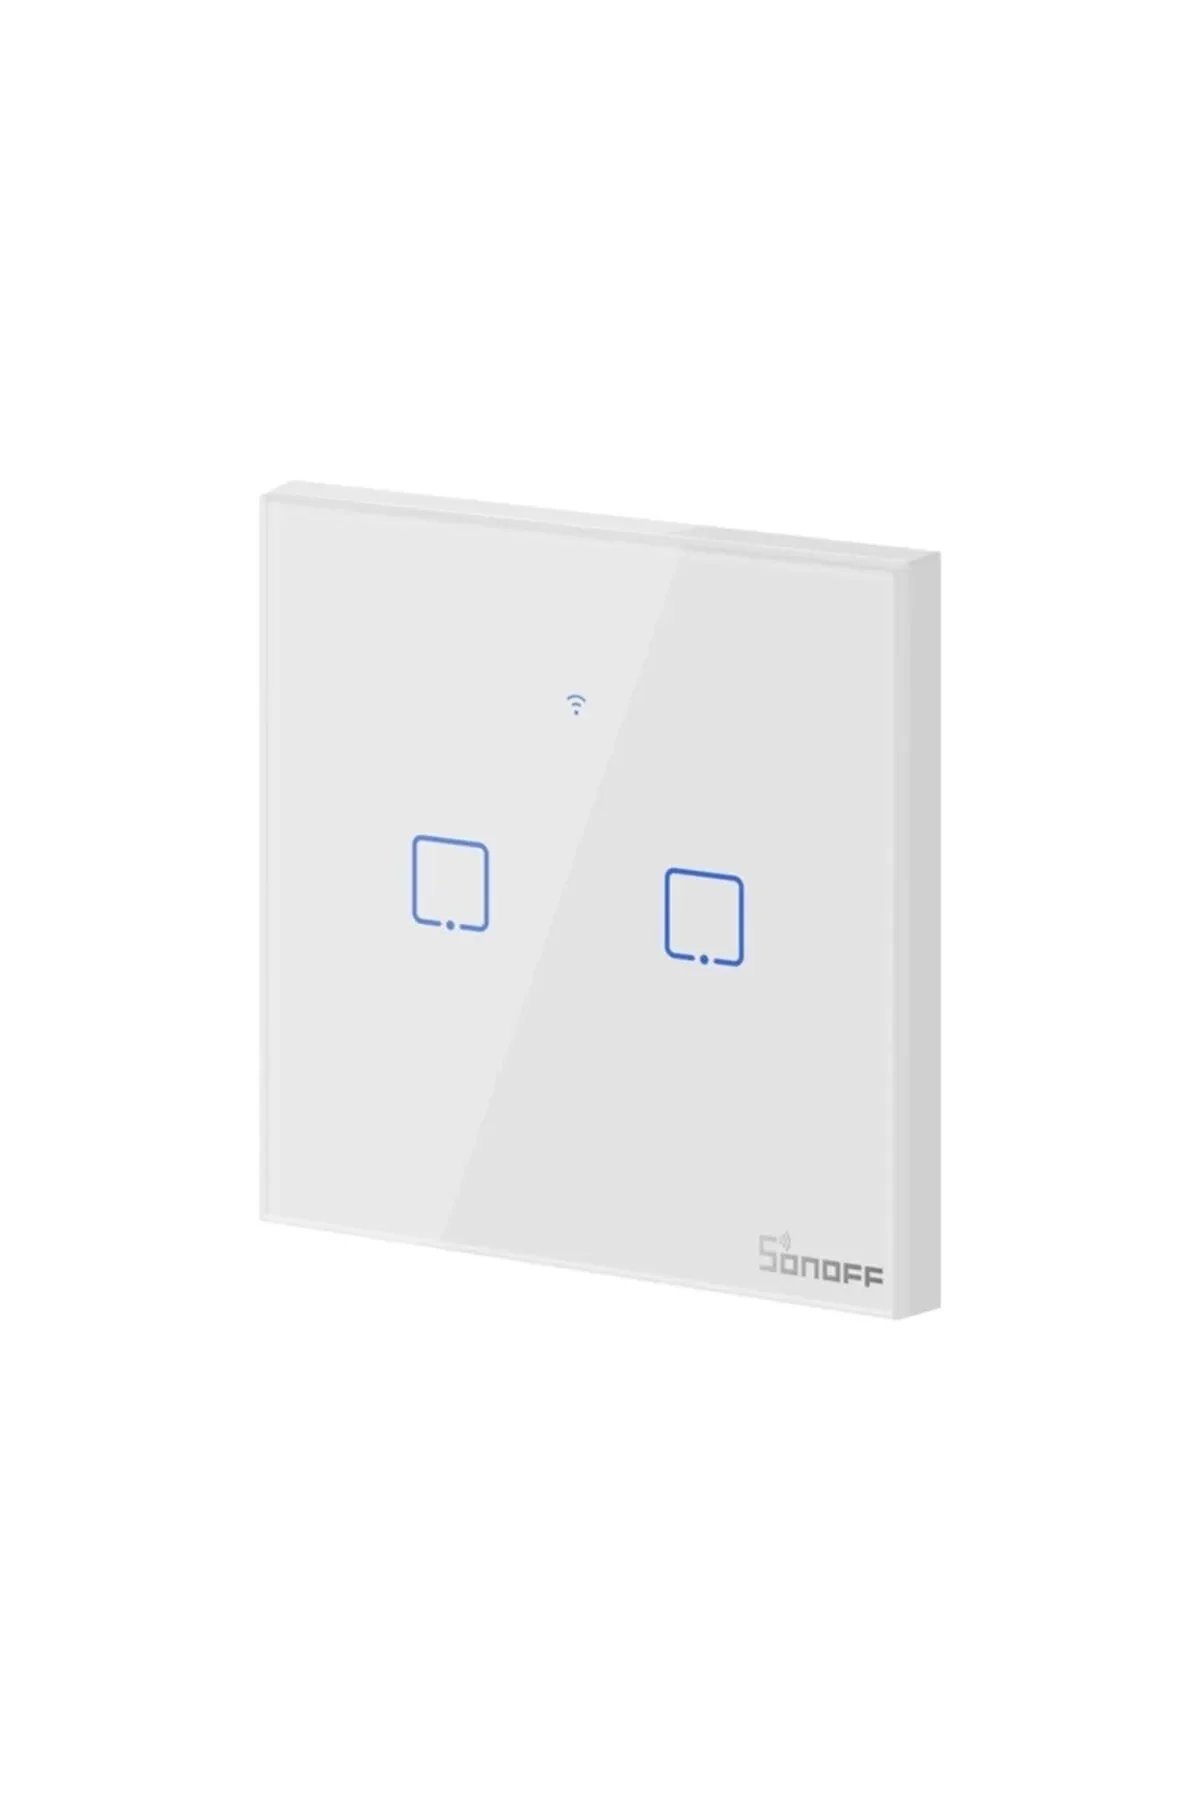 Sonoff T0EU2C - Smart Switch- Google and Alexa Compatible